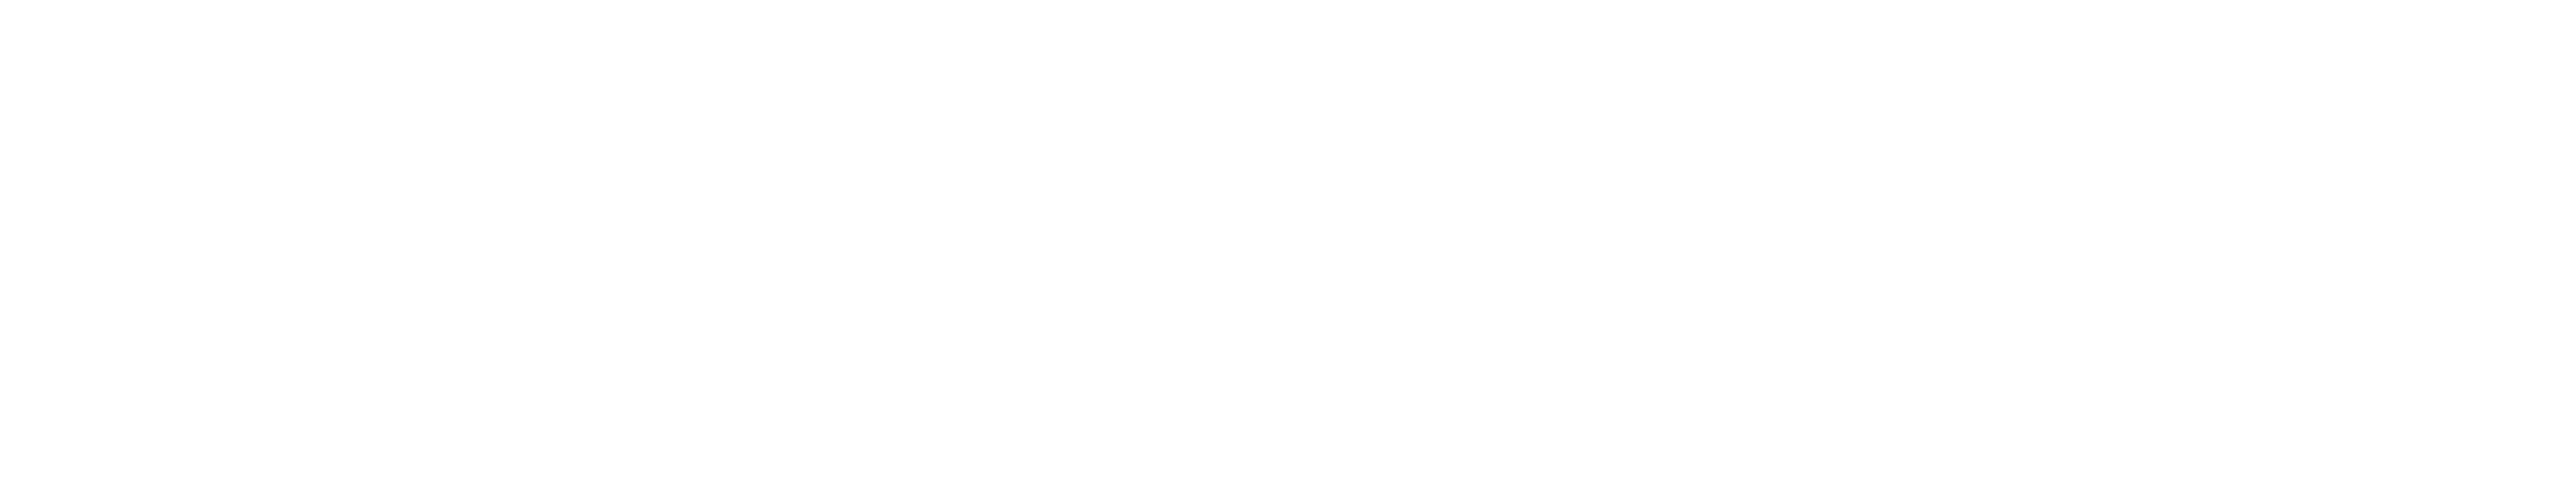 Xcel Energ